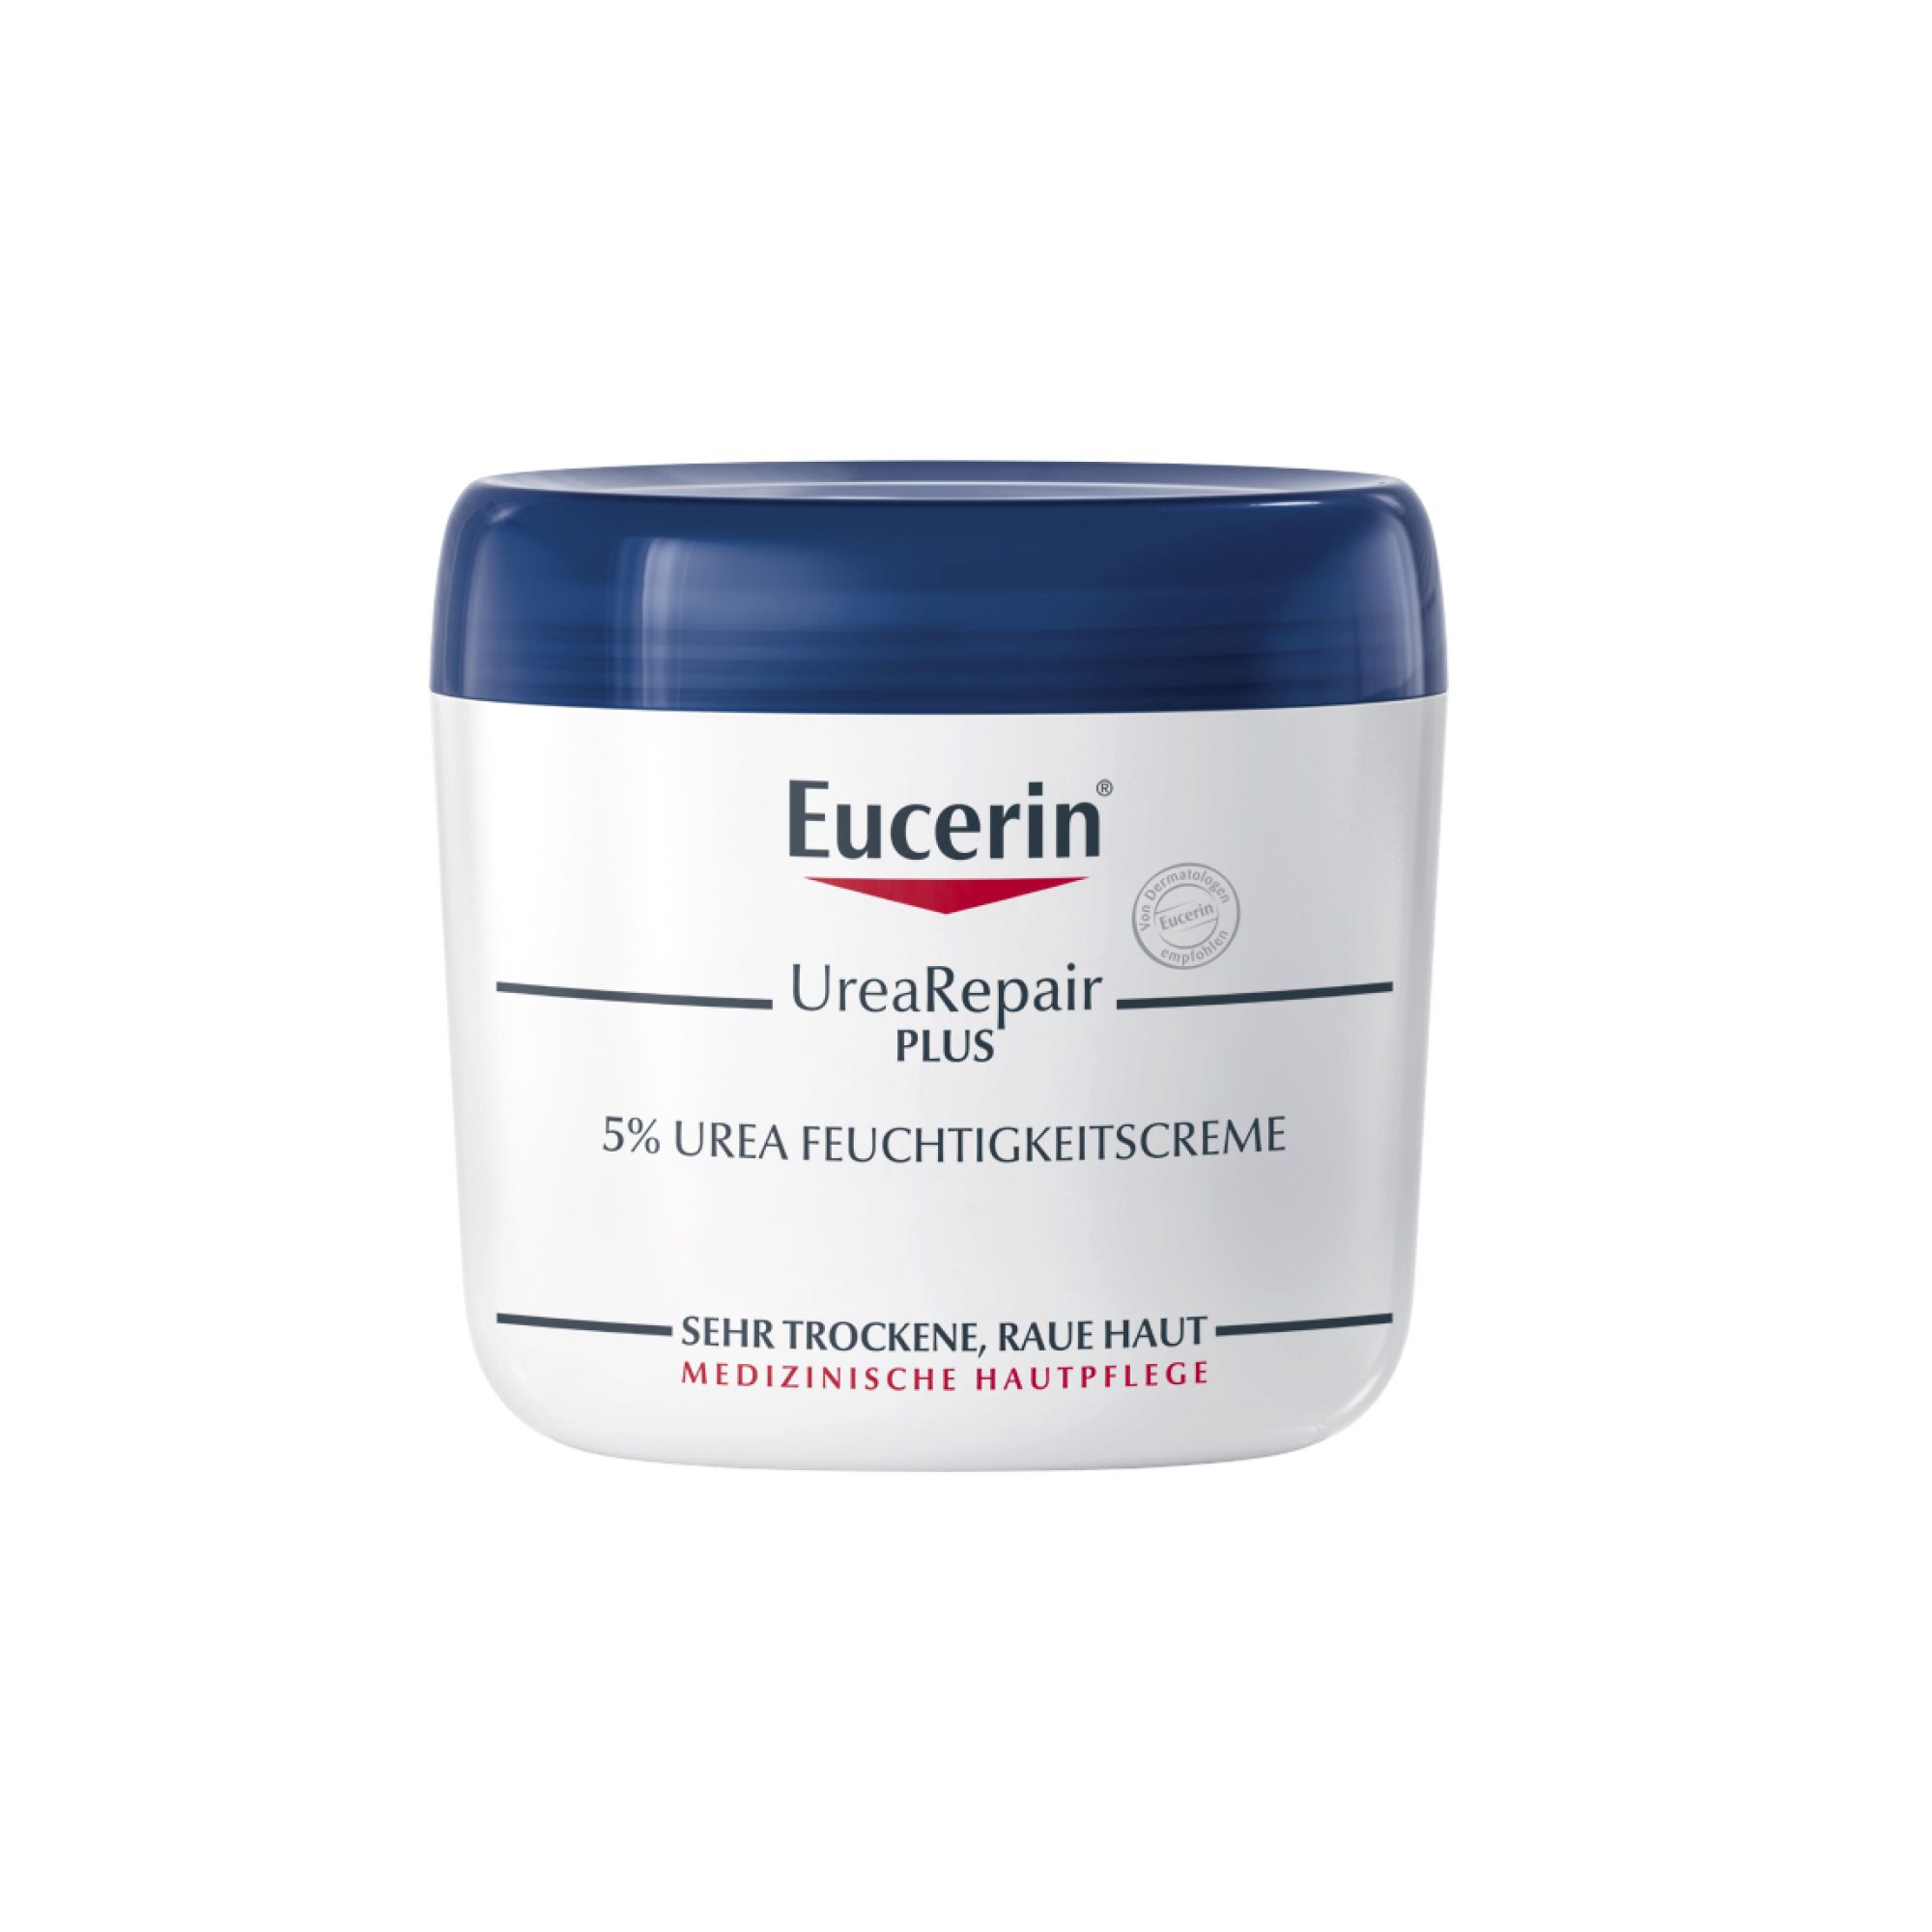 Eucerin® UreaRepair PLUS Feuchtigkeitscreme 5%